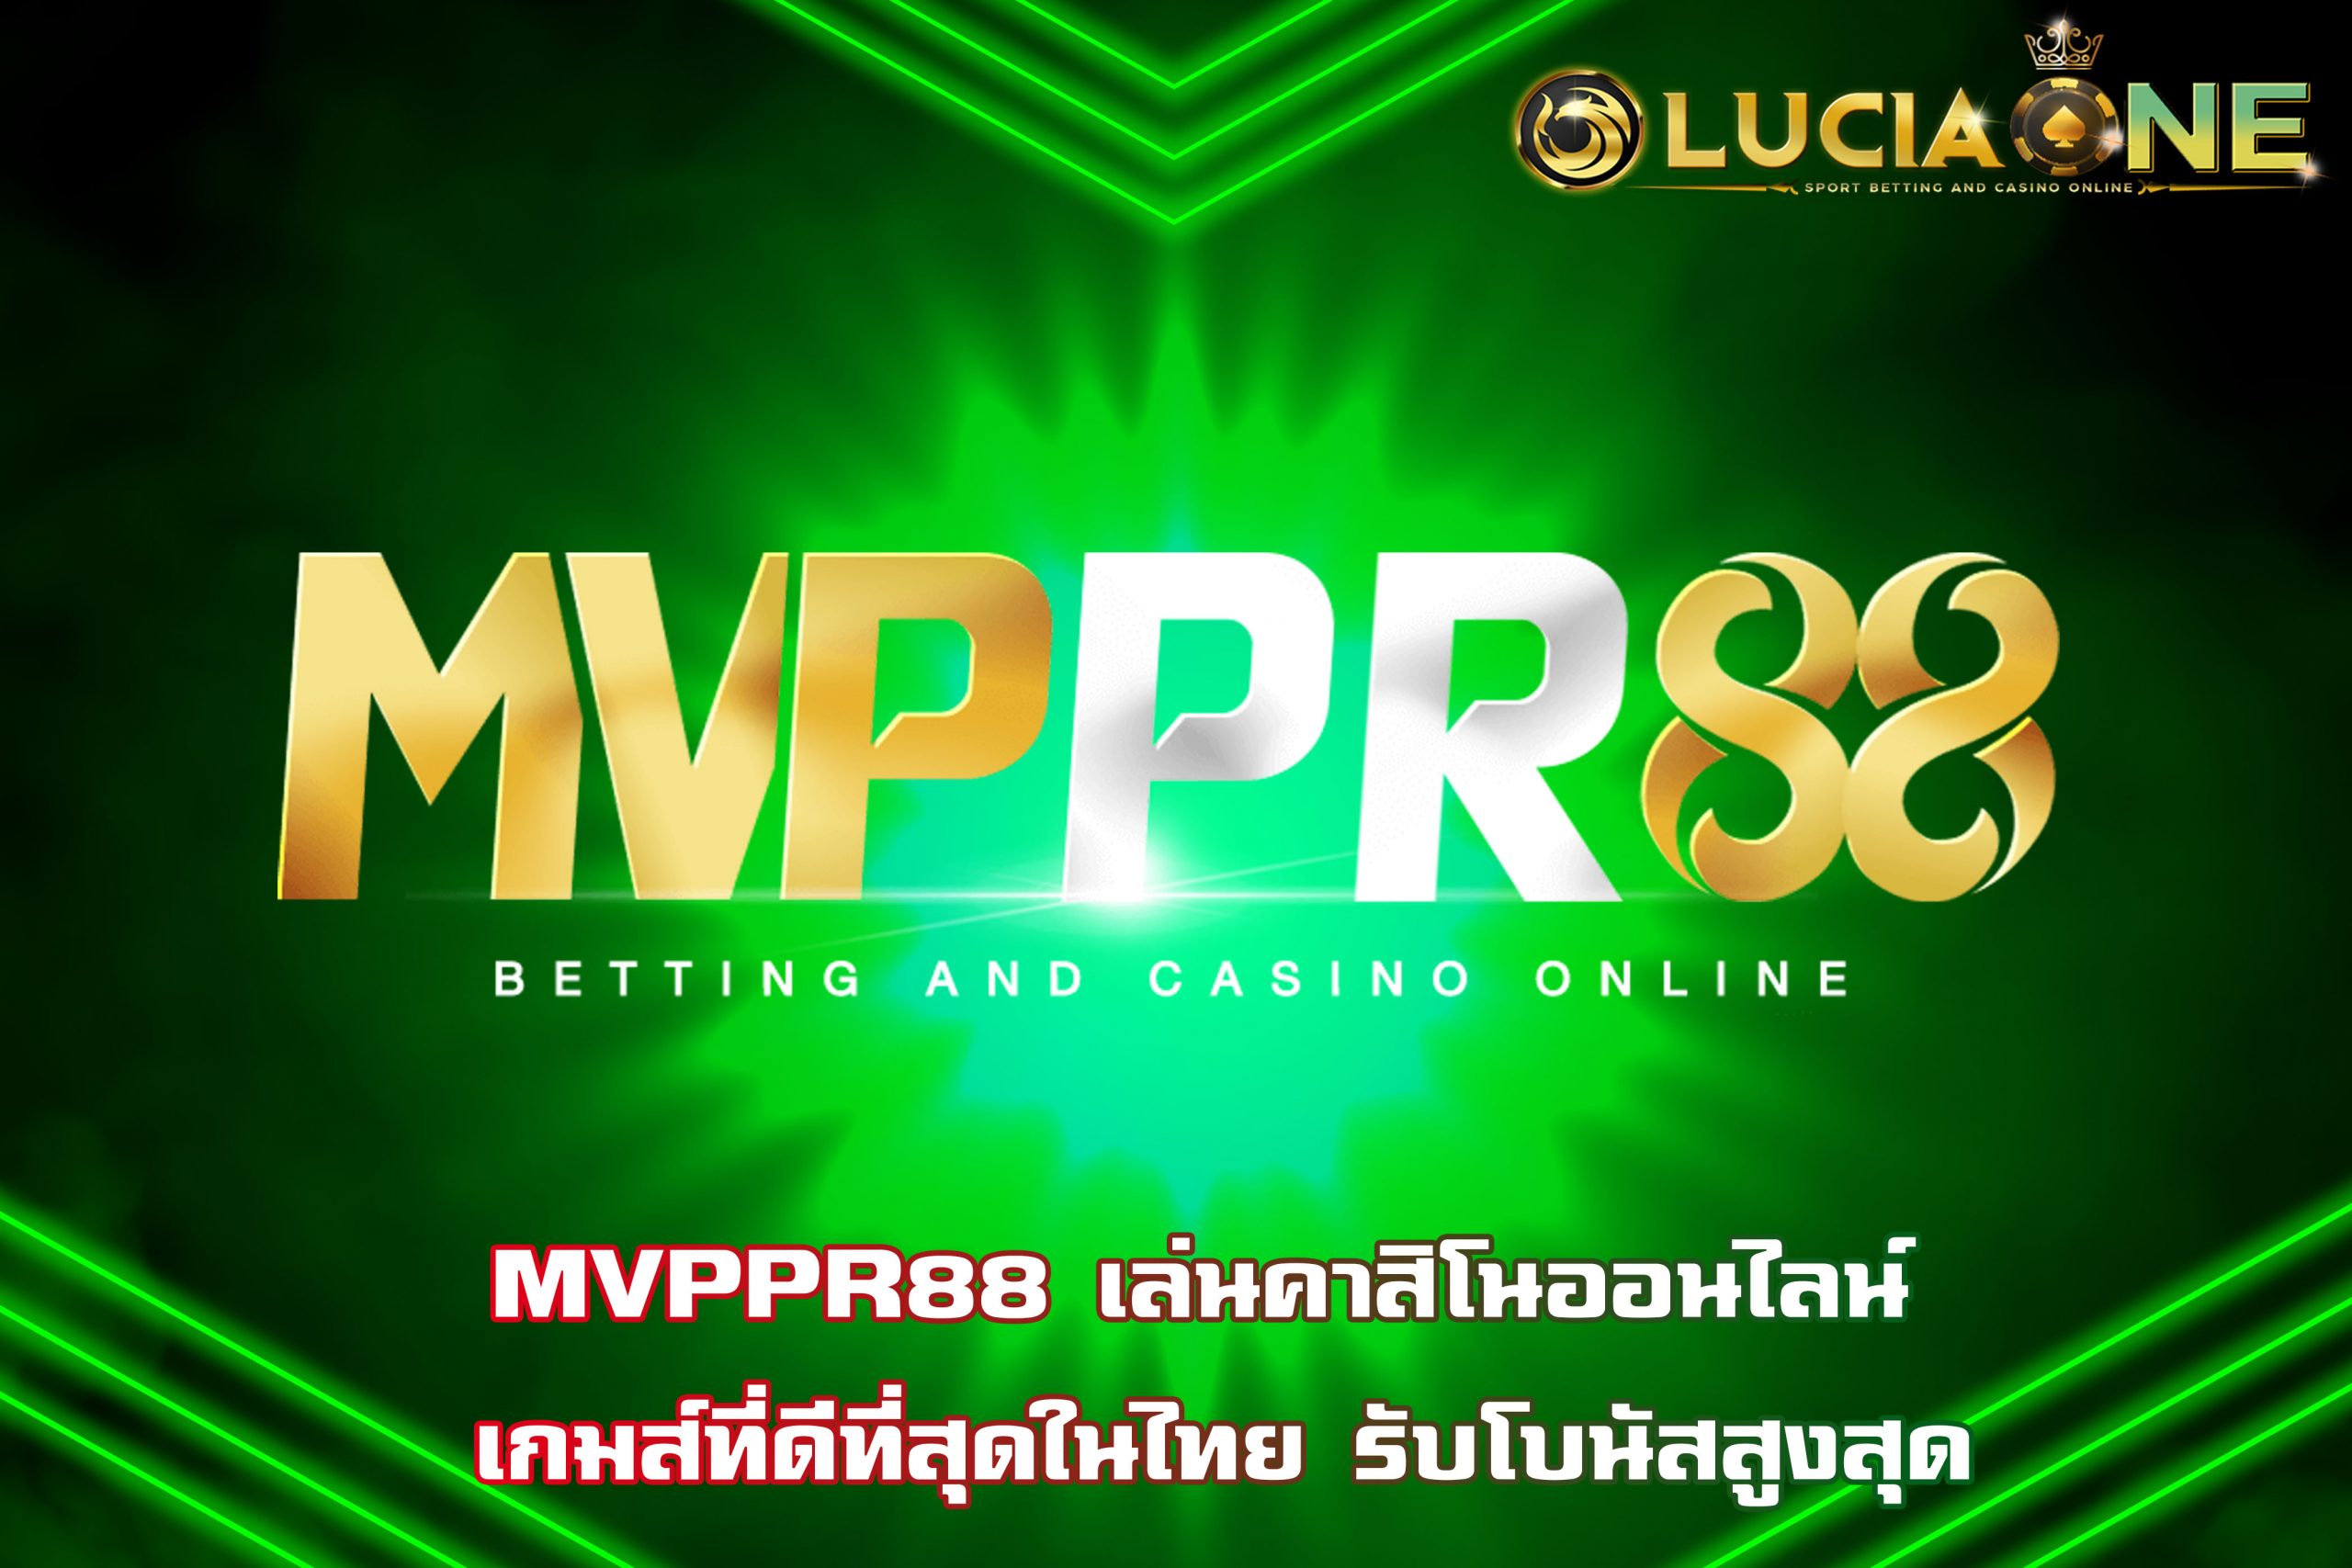 MVPPR88 เล่นคาสิโนออนไลน์ เกมส์ที่ดีที่สุดในไทย รับโบนัสสูงสุด